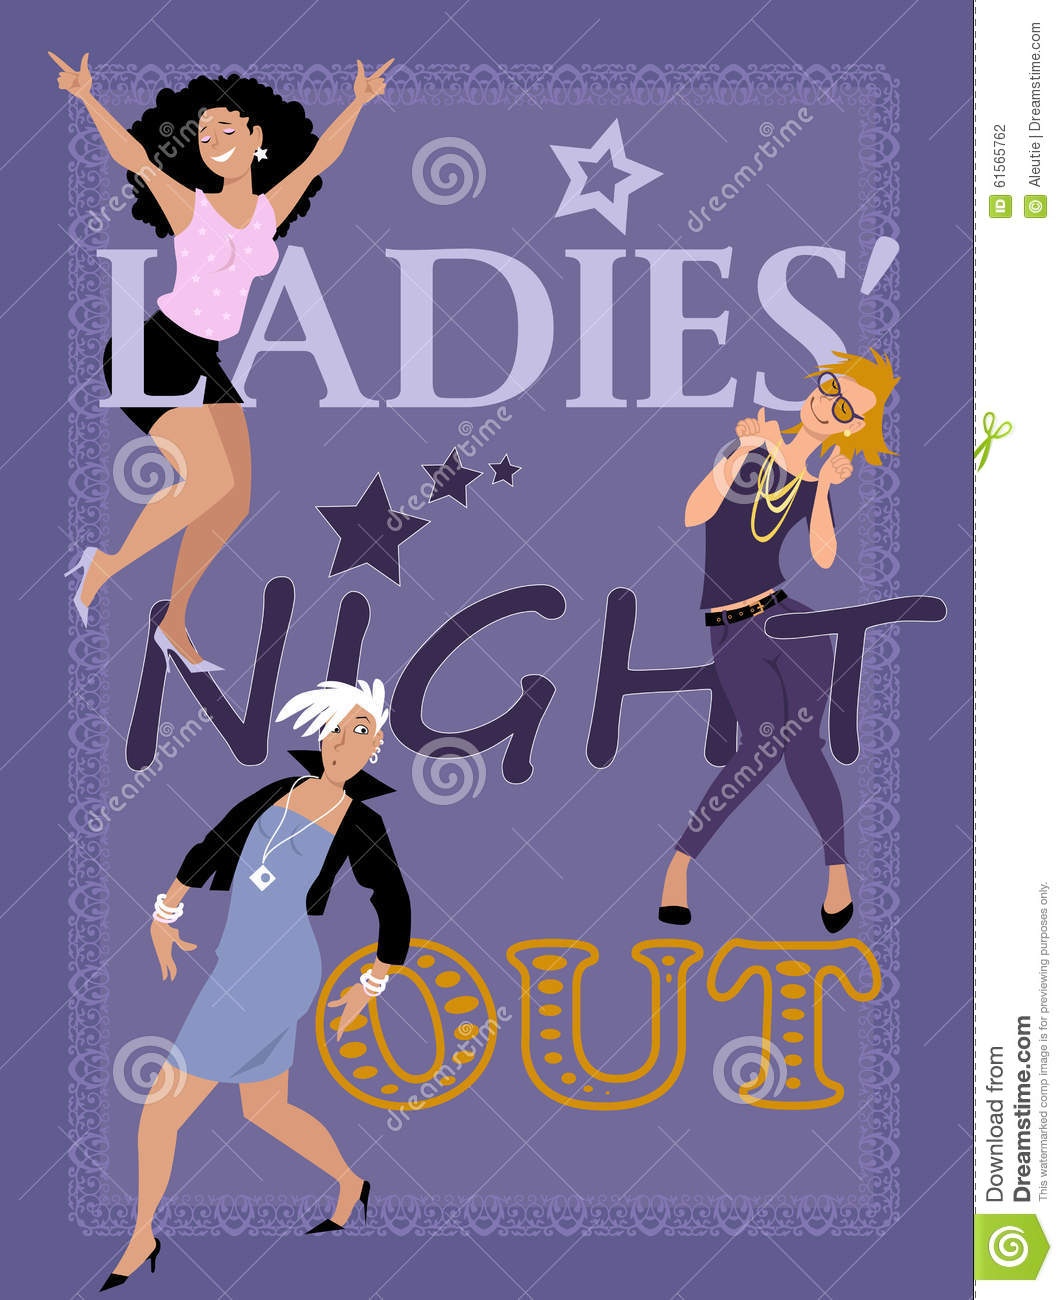 Ladies  Night Out Invitation Design With Three Stylish Fun Women